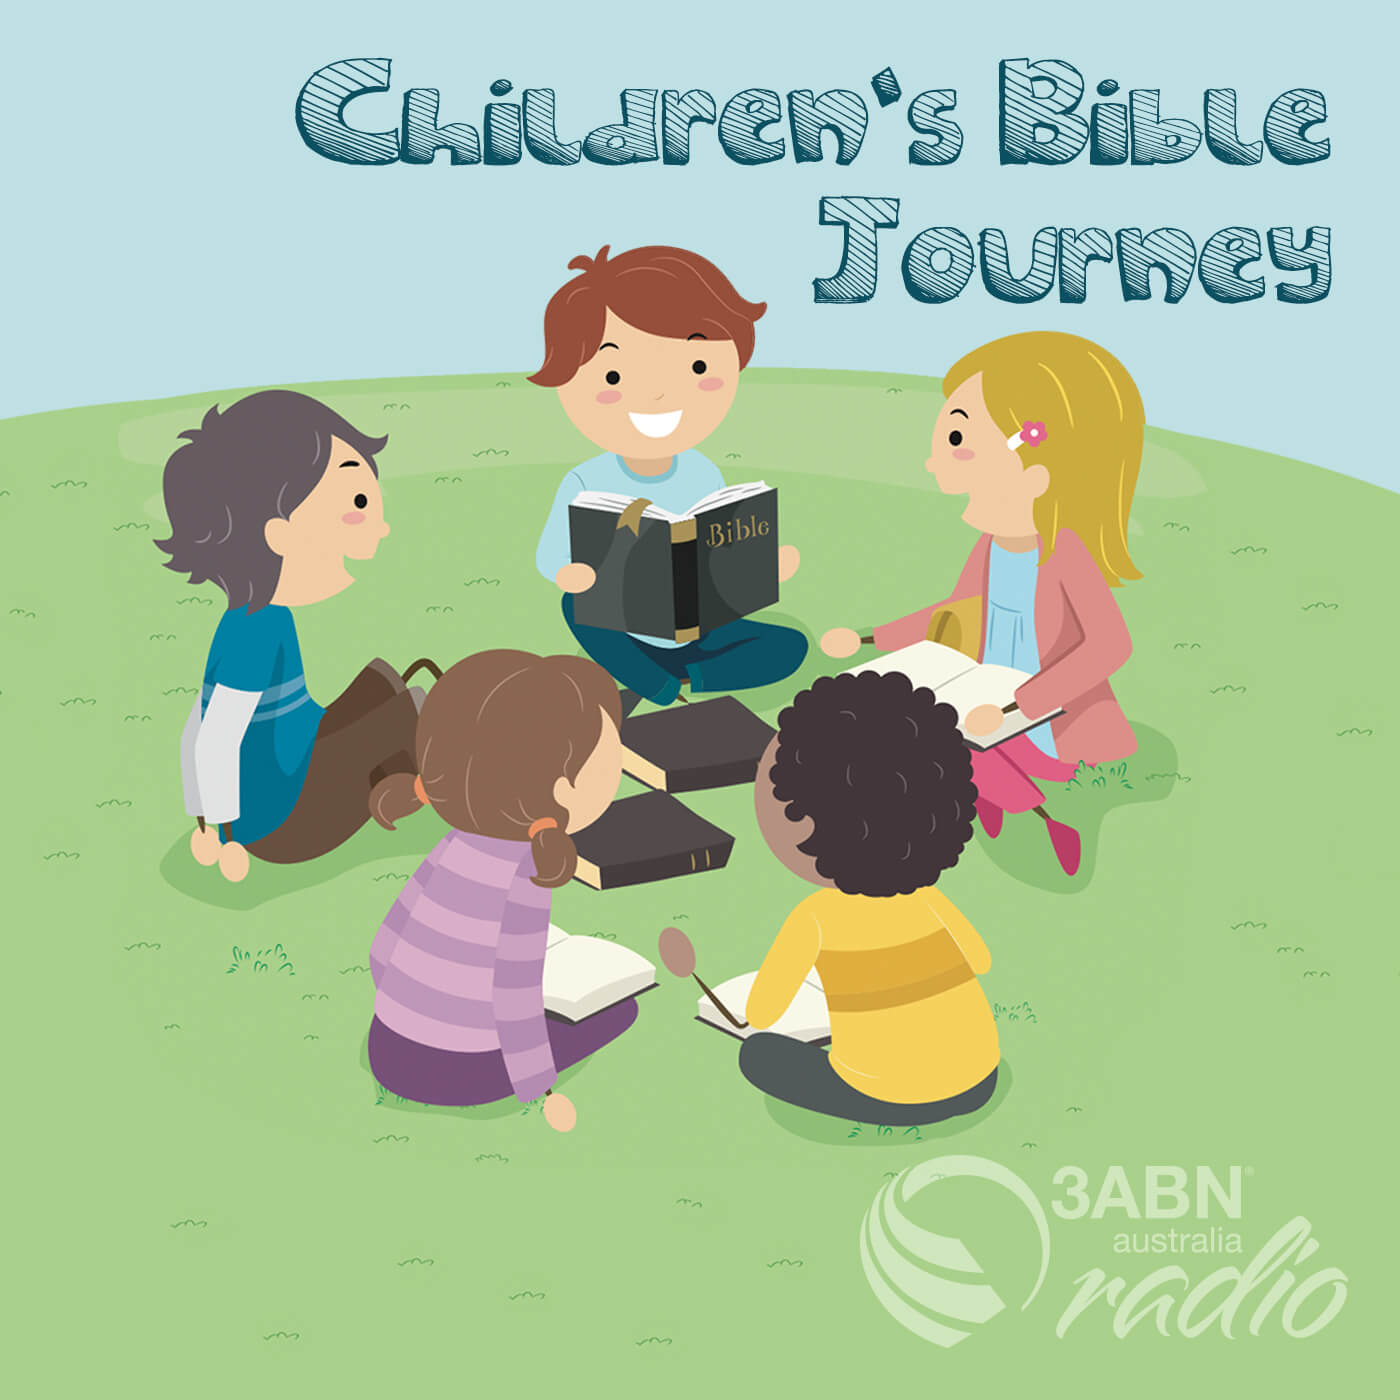 Children's Bible Journey - 2136